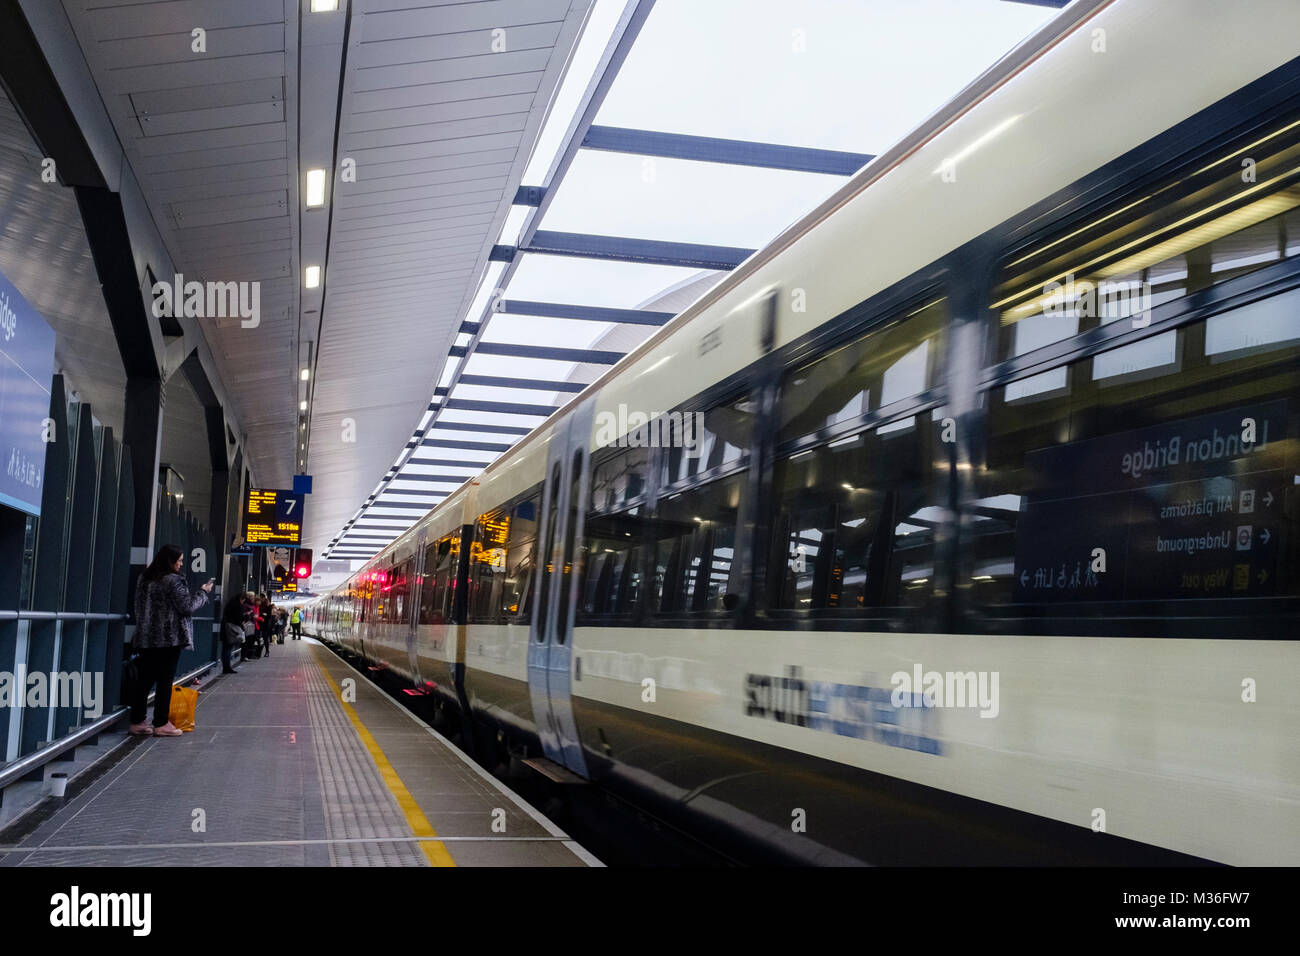 A Southeastern train passing through London Bridge station, London, UK Stock Photo